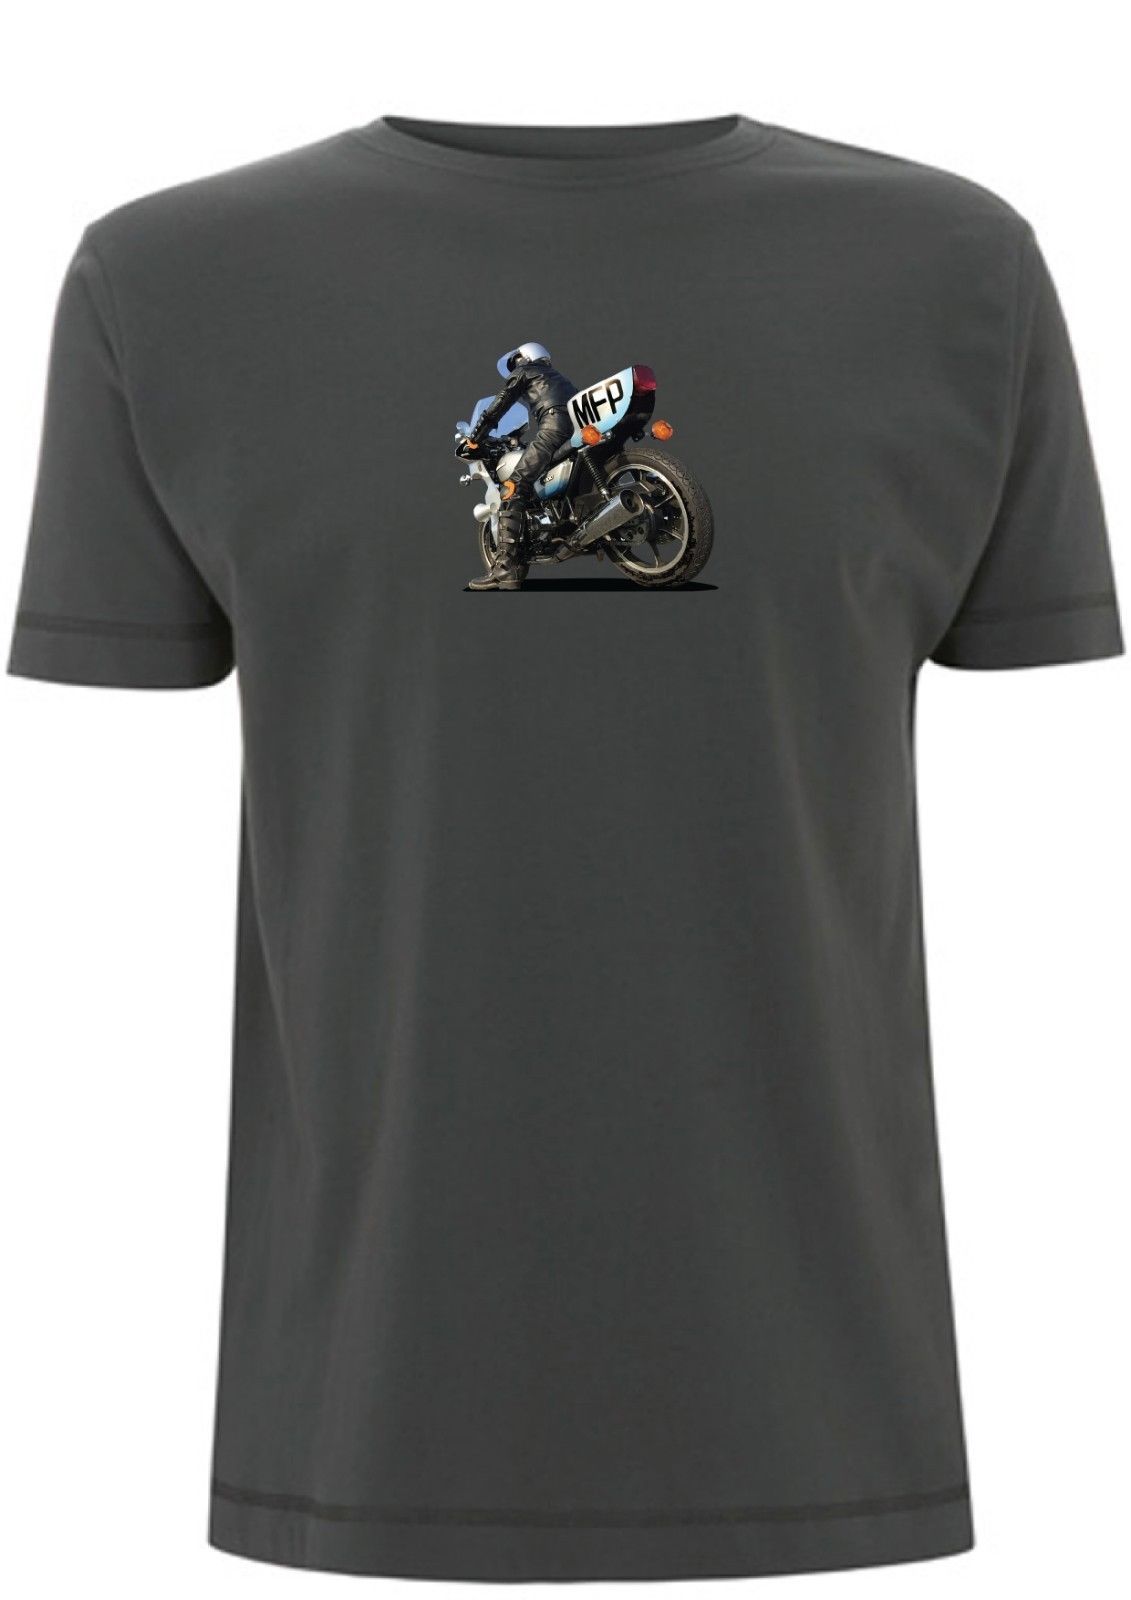 Mad Max T Shirt Jim Goose Classic Kawasaki Z1000 MFP Bike Movie Cafe Racer Ride Gift Print T Shirt,Hip Hop Tee Shirt,NEW ARRIVAL Tees From Xiaobai713, $17.14 DHgate.Com